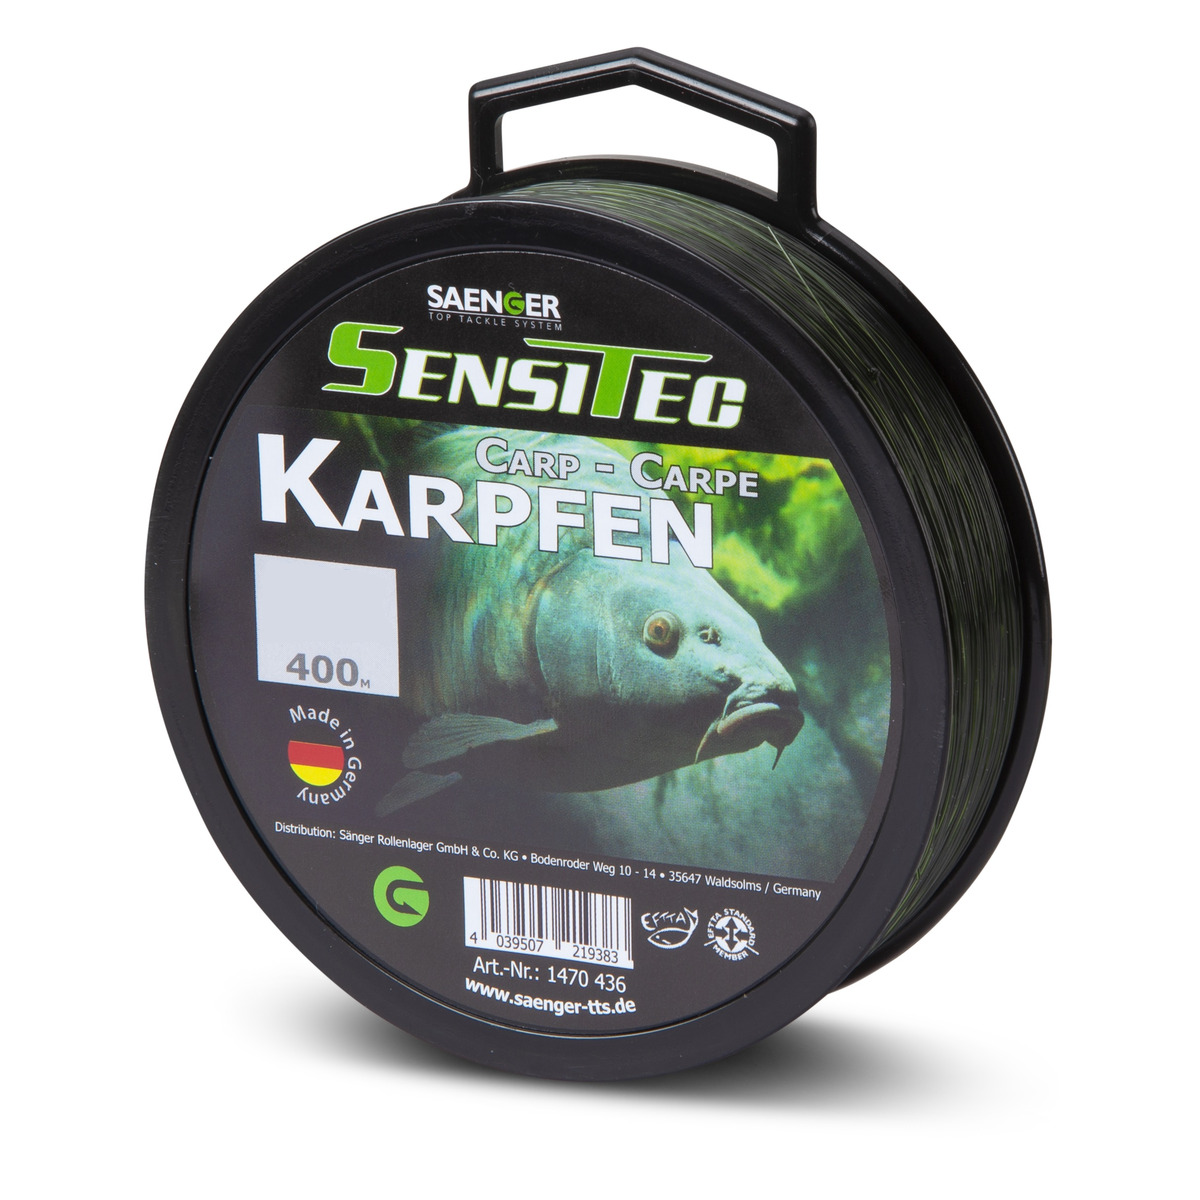 Sensitec Karpfen camou green 400 m - 0.30 mm